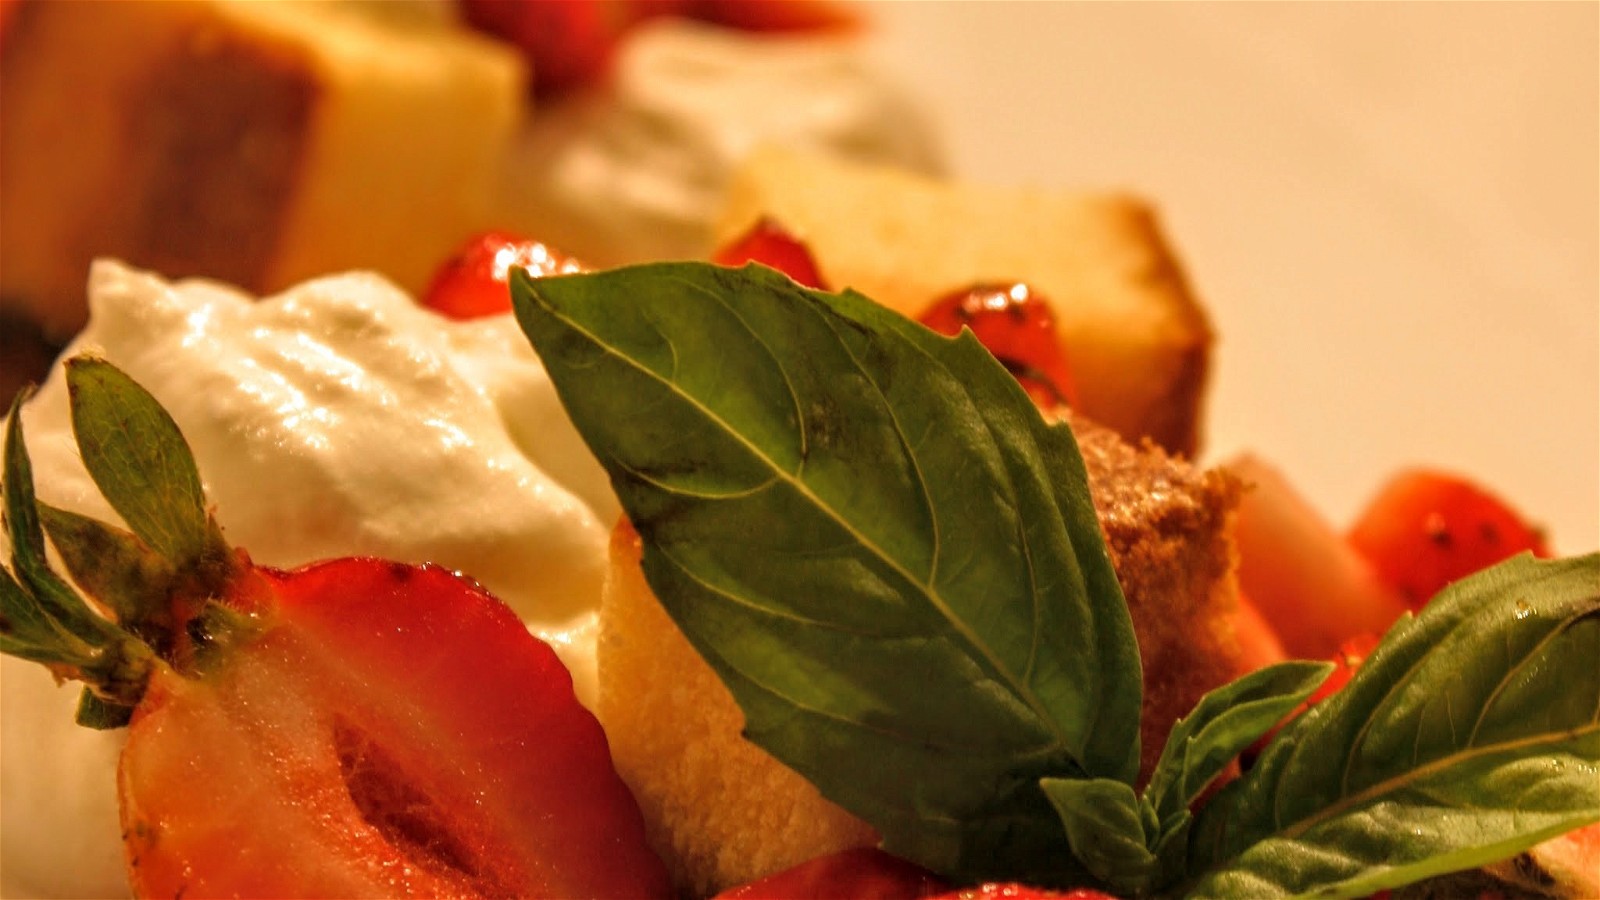 Image of Strawberry Shortcake with Whipped Cream